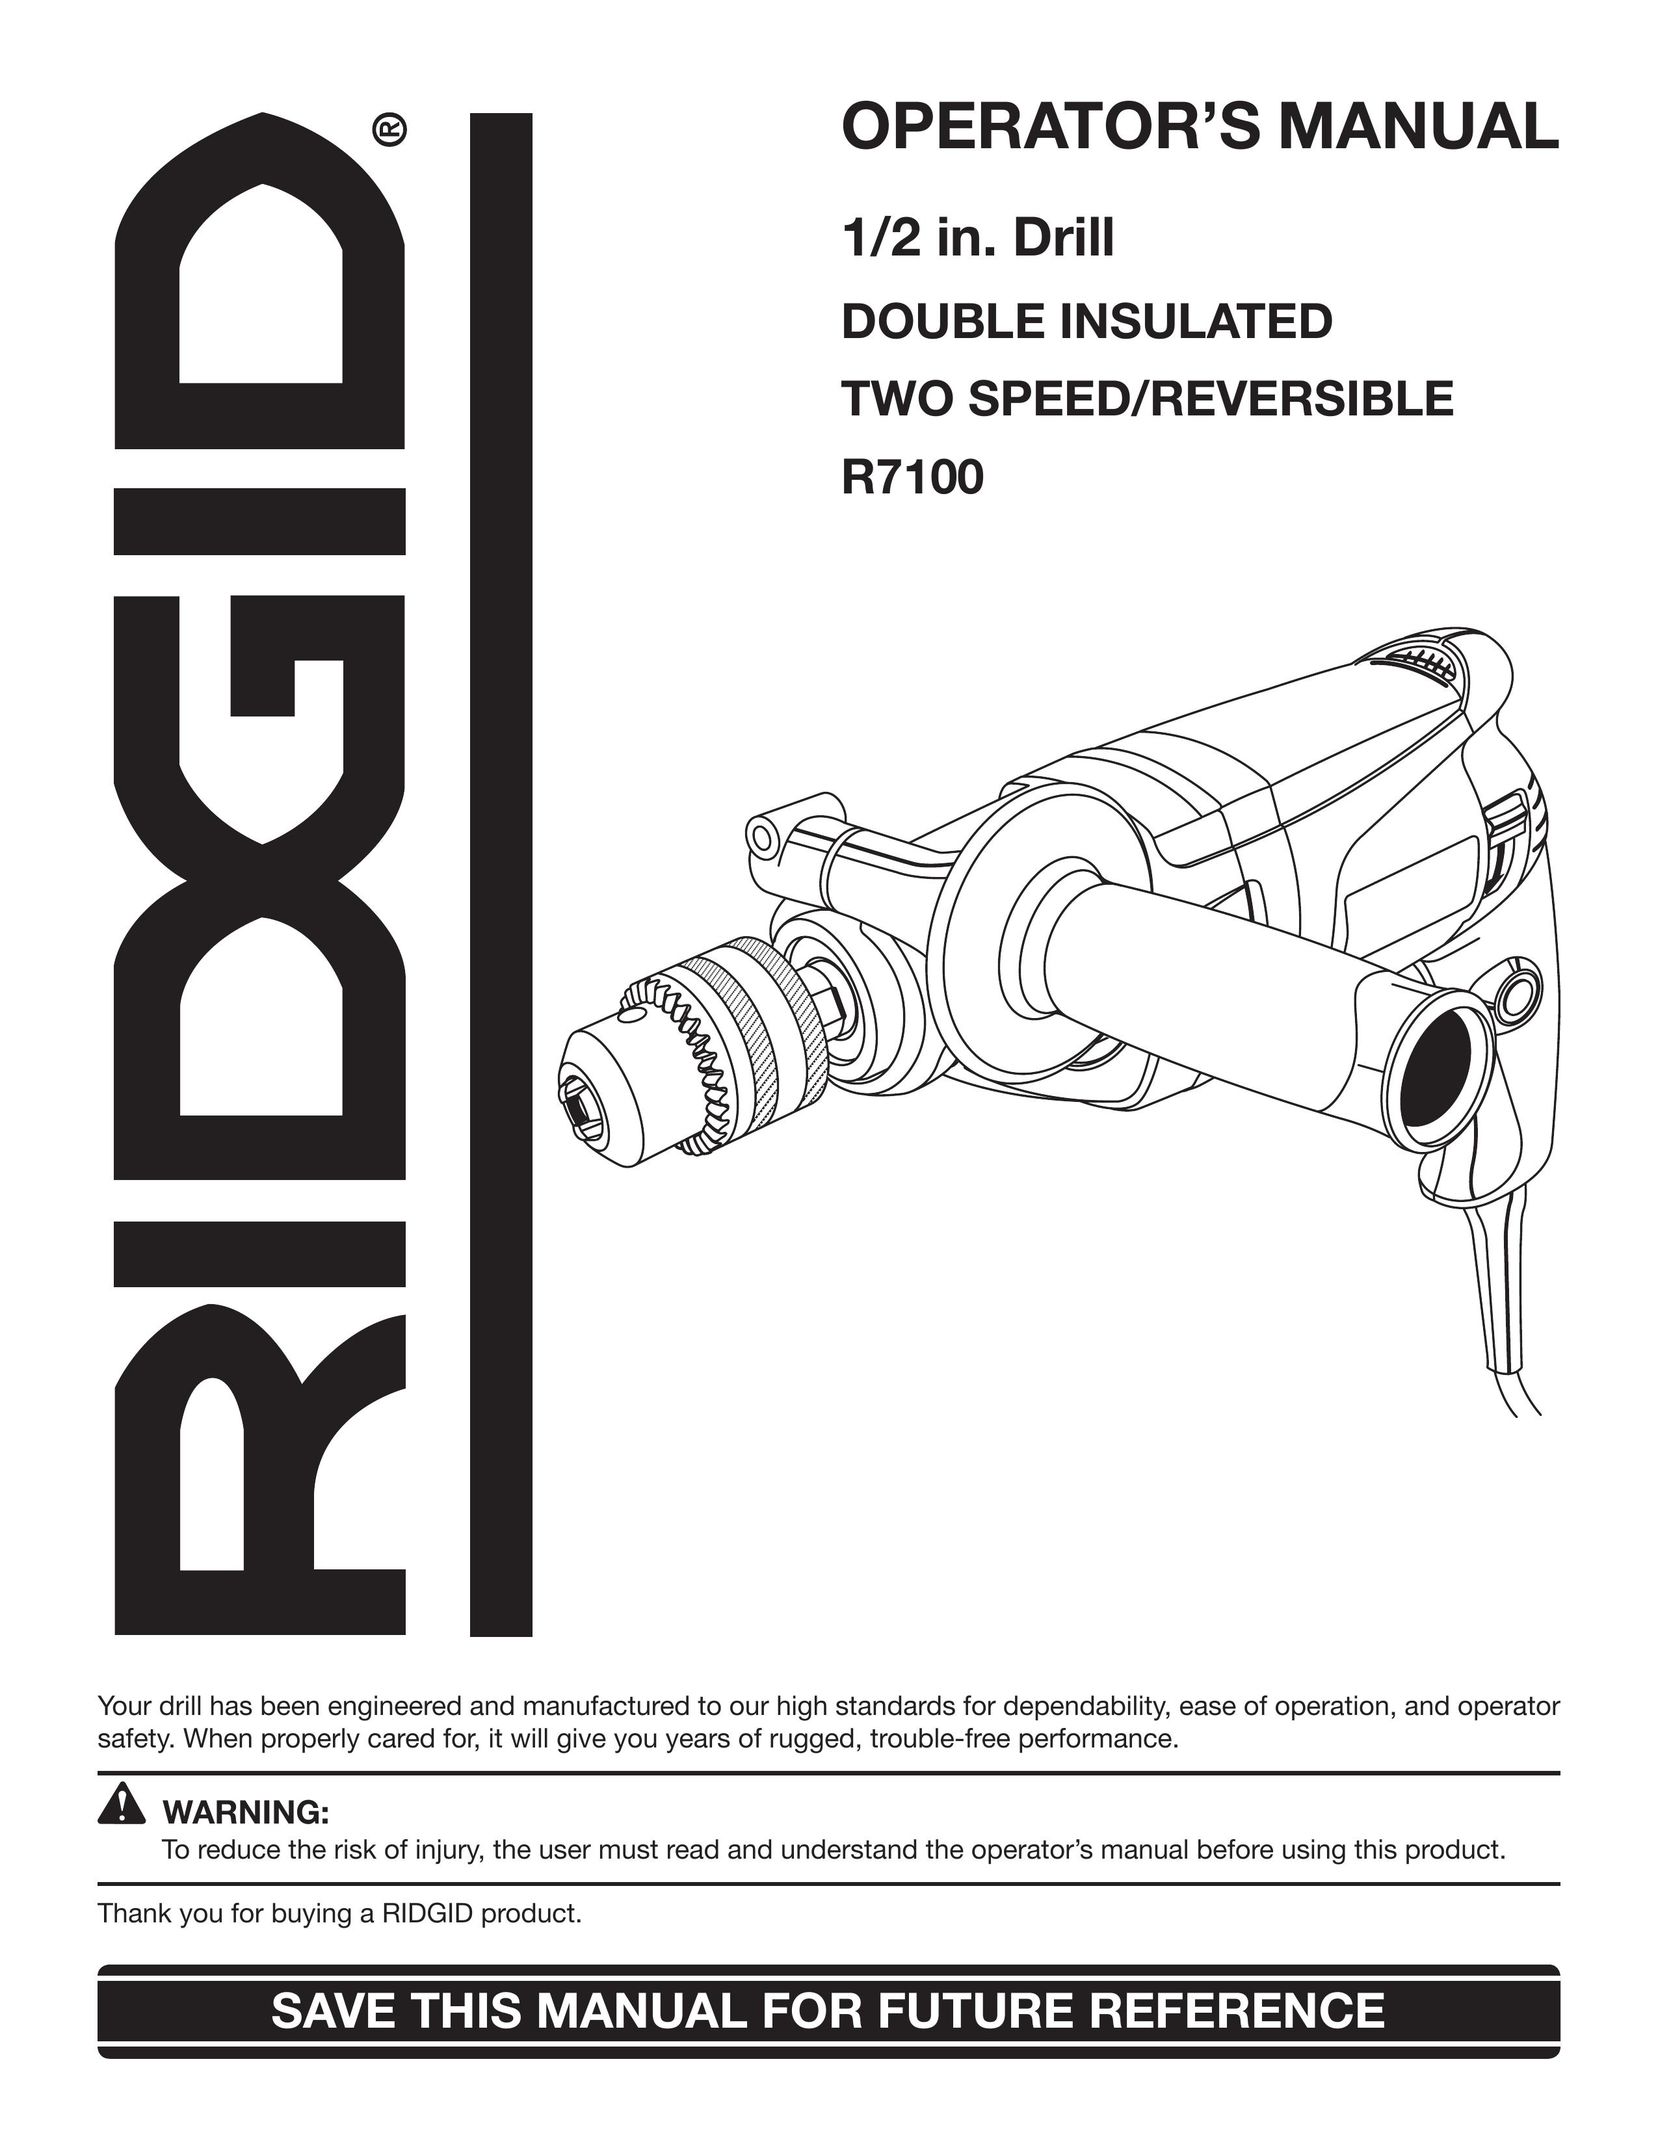 RIDGID R7100 Drill User Manual